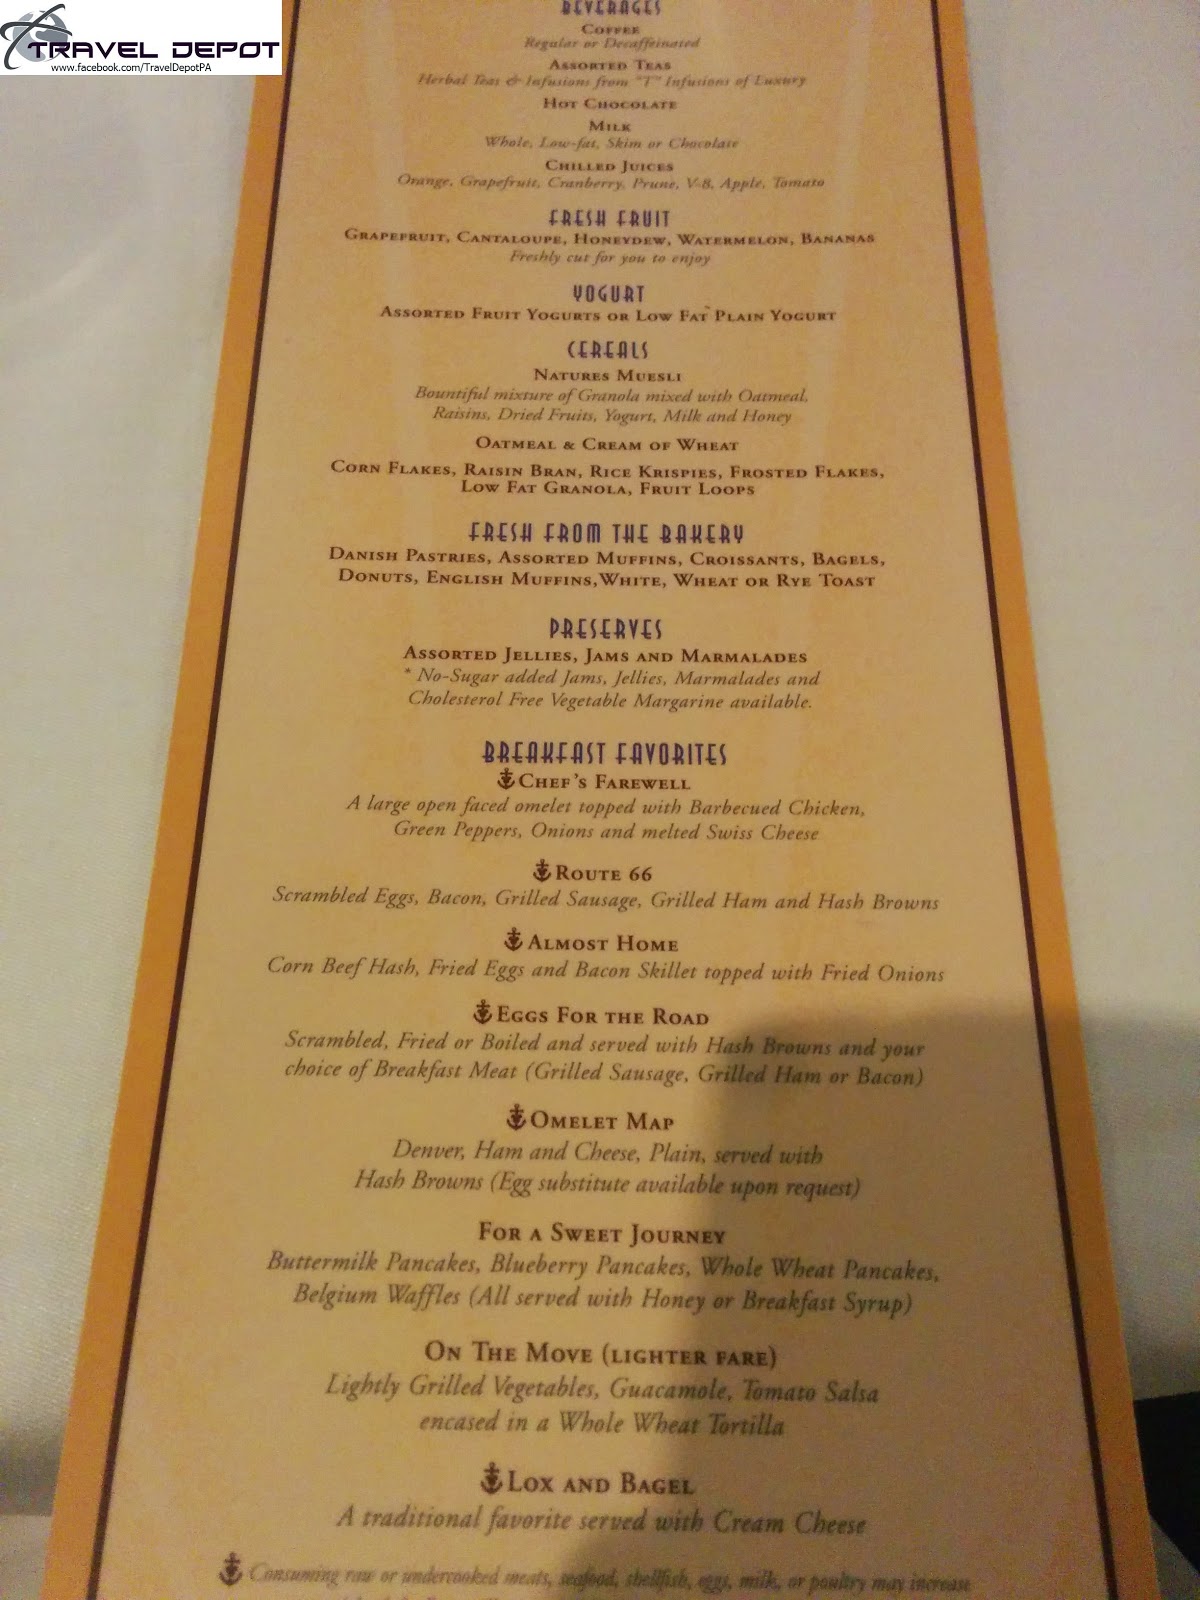 Main Dining Room menus aboard the Disney Magic Cruise Ship Travel Depot